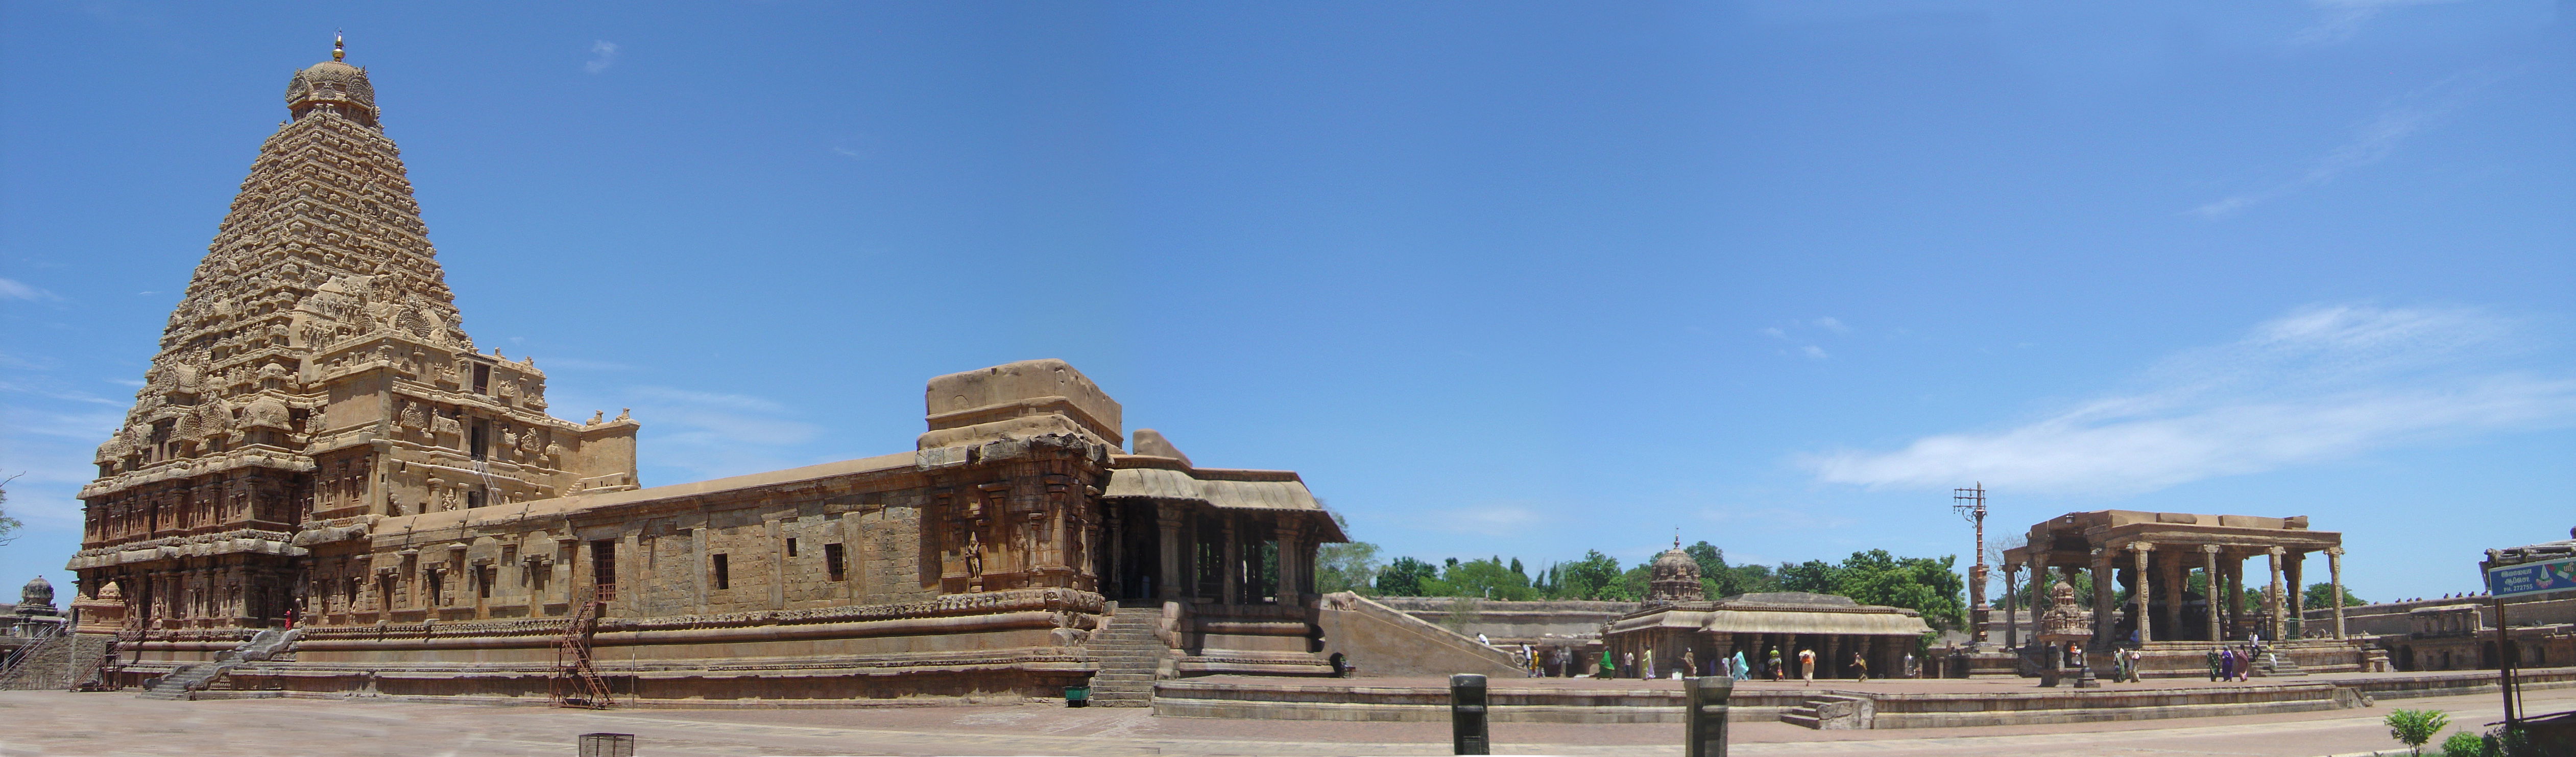 File:Brihadeeswara temple Thanjavur vista1.jpg - Wikipedia